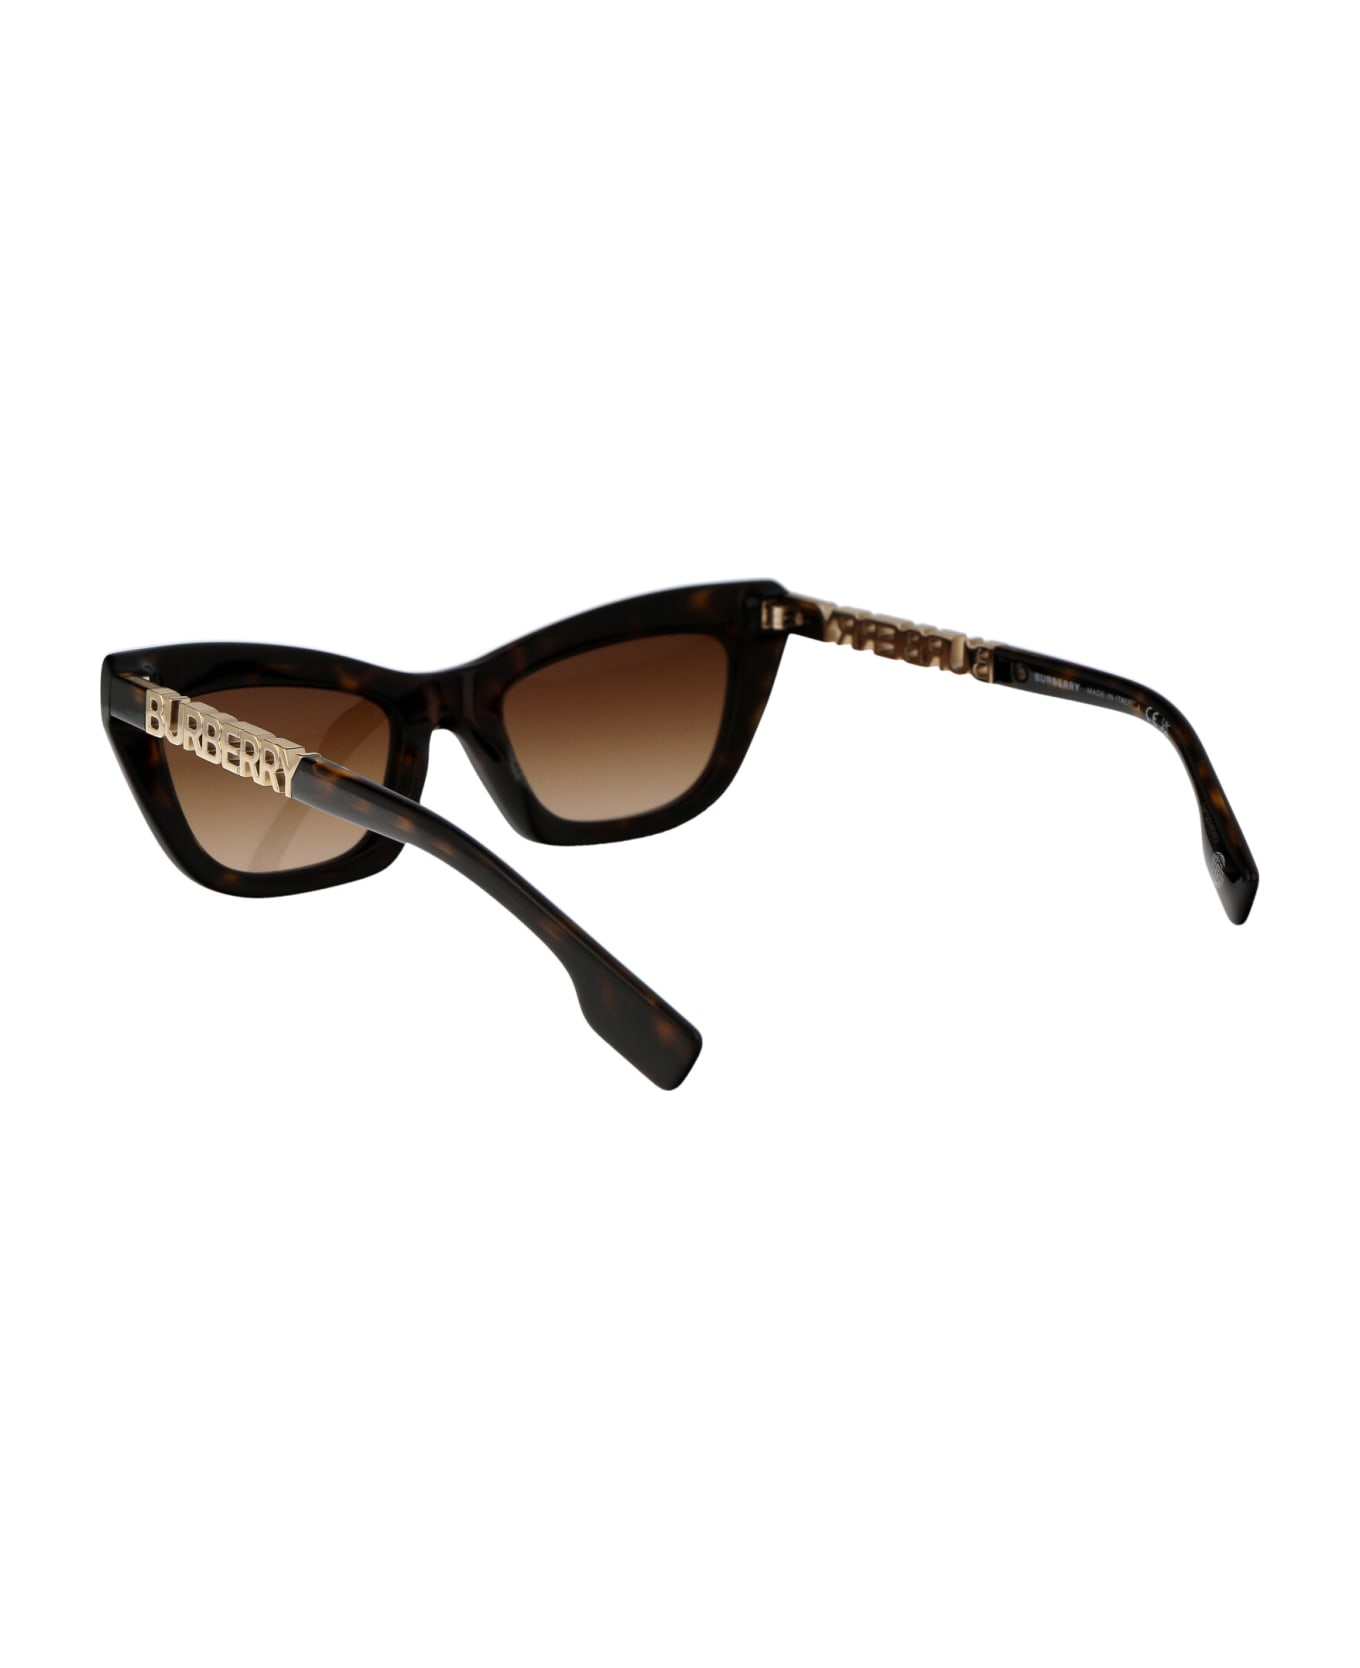 Burberry Eyewear 0be4409 Sunglasses - 300213 DARK HAVANA